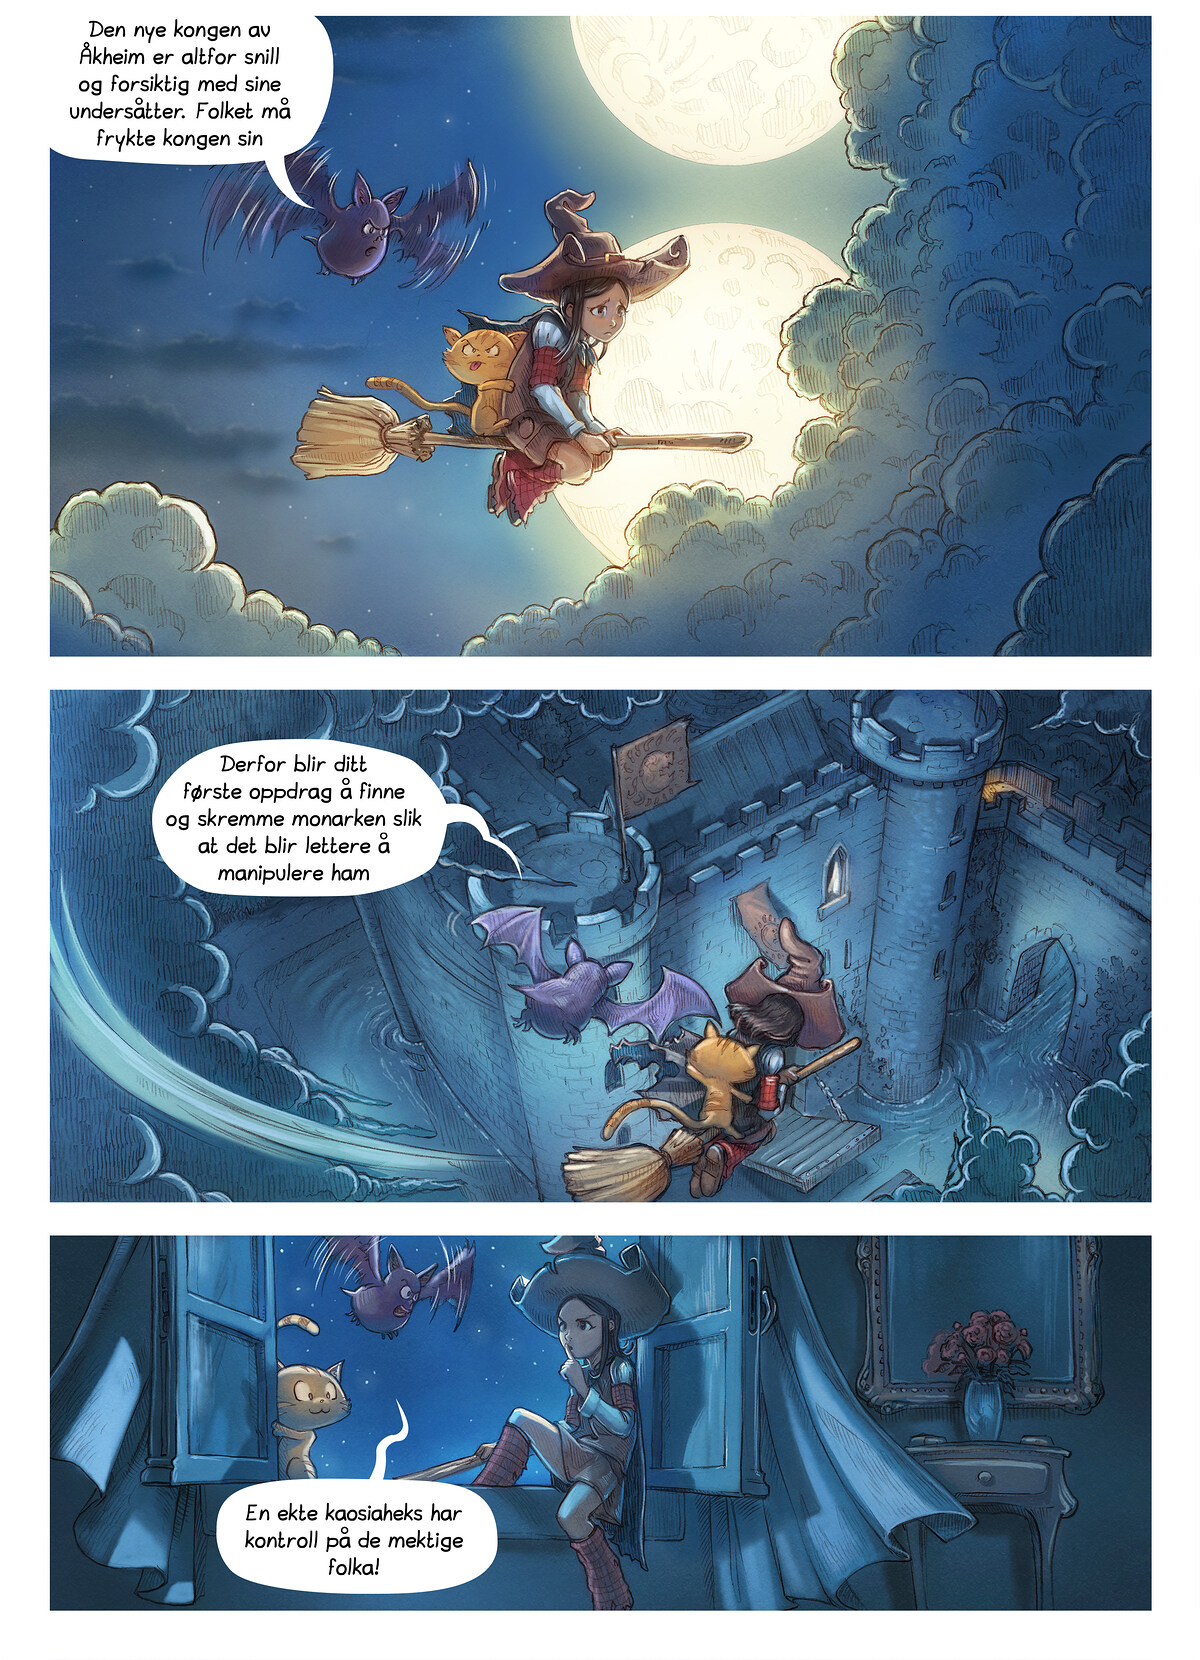 Episode 11: Kaosias hekser, Page 3